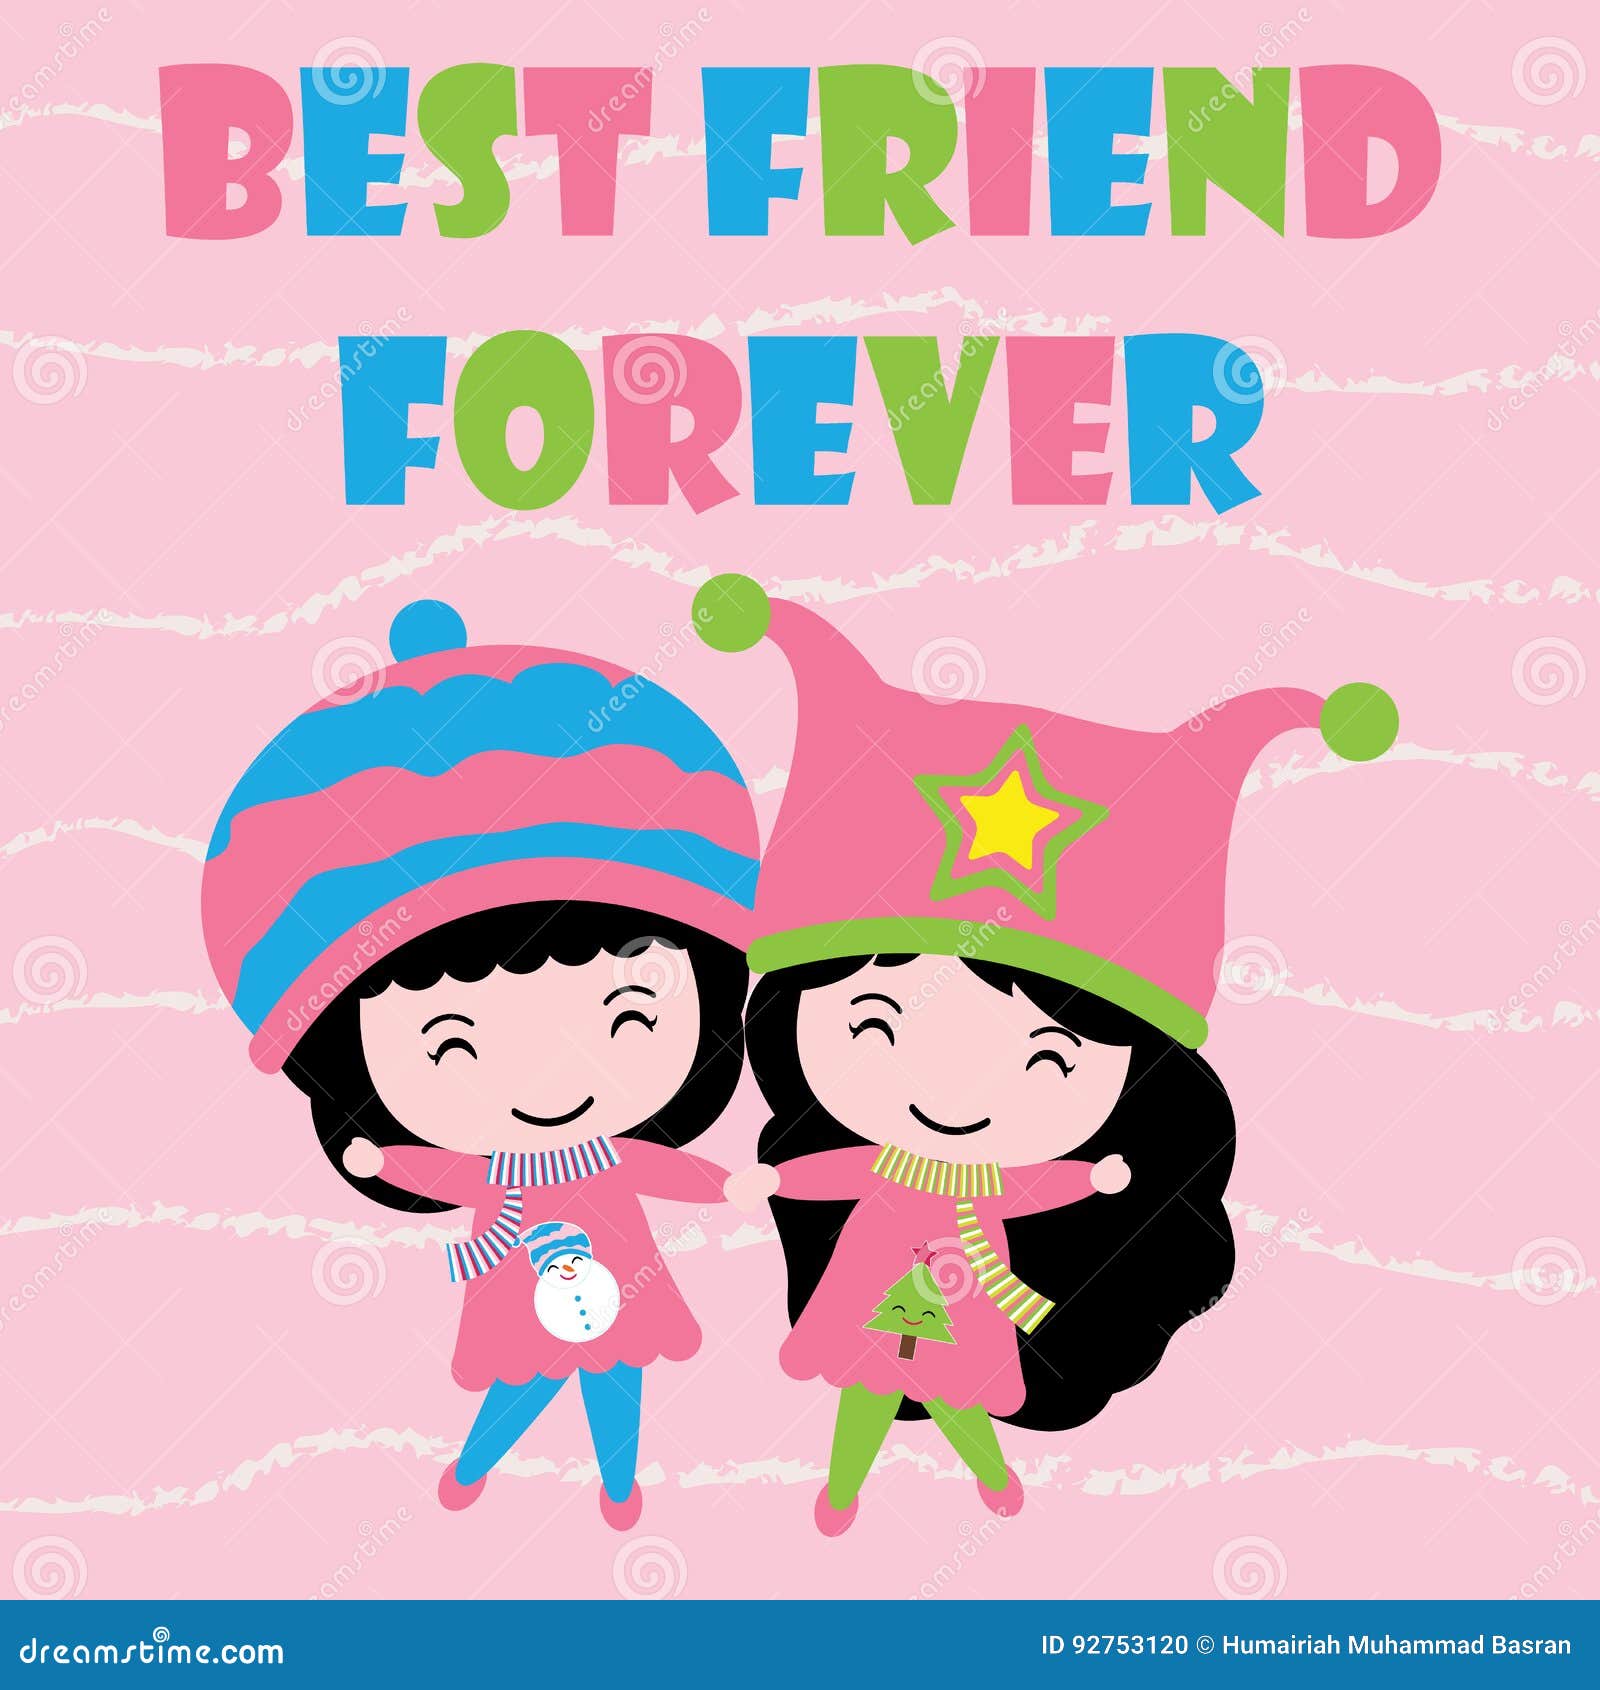 Free Cute Friendship Images Wallpaper, Cute Friendship Images Wallpaper  Download - WallpaperUse - 1